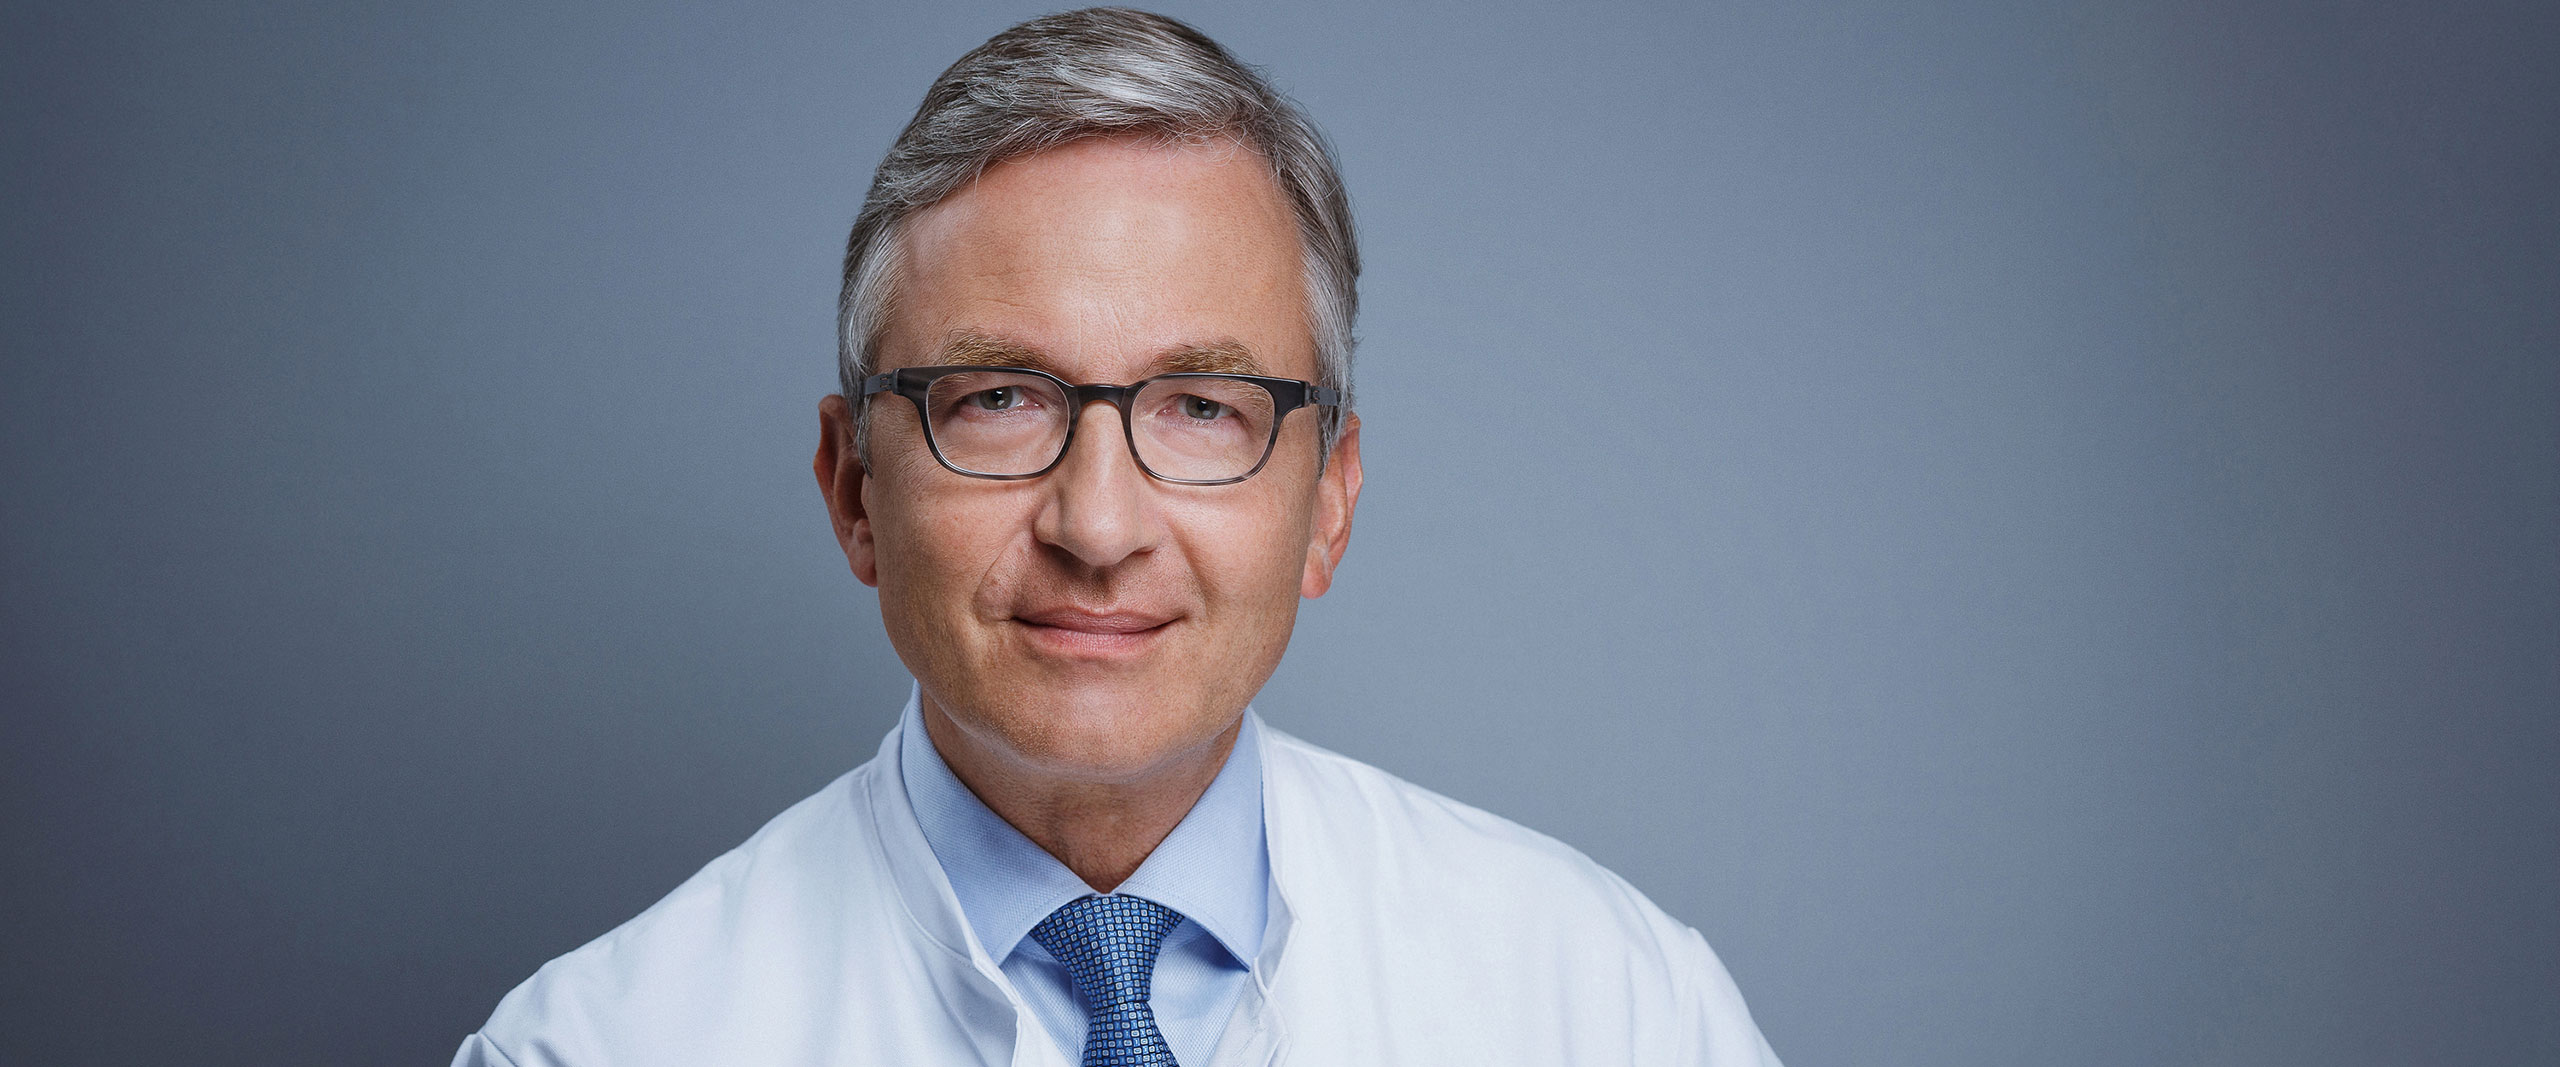 Prof. Frank Holz, Direktor der Universitäts-Augenklinik am UKB, ist international führender Experte für Makuladegeneration.